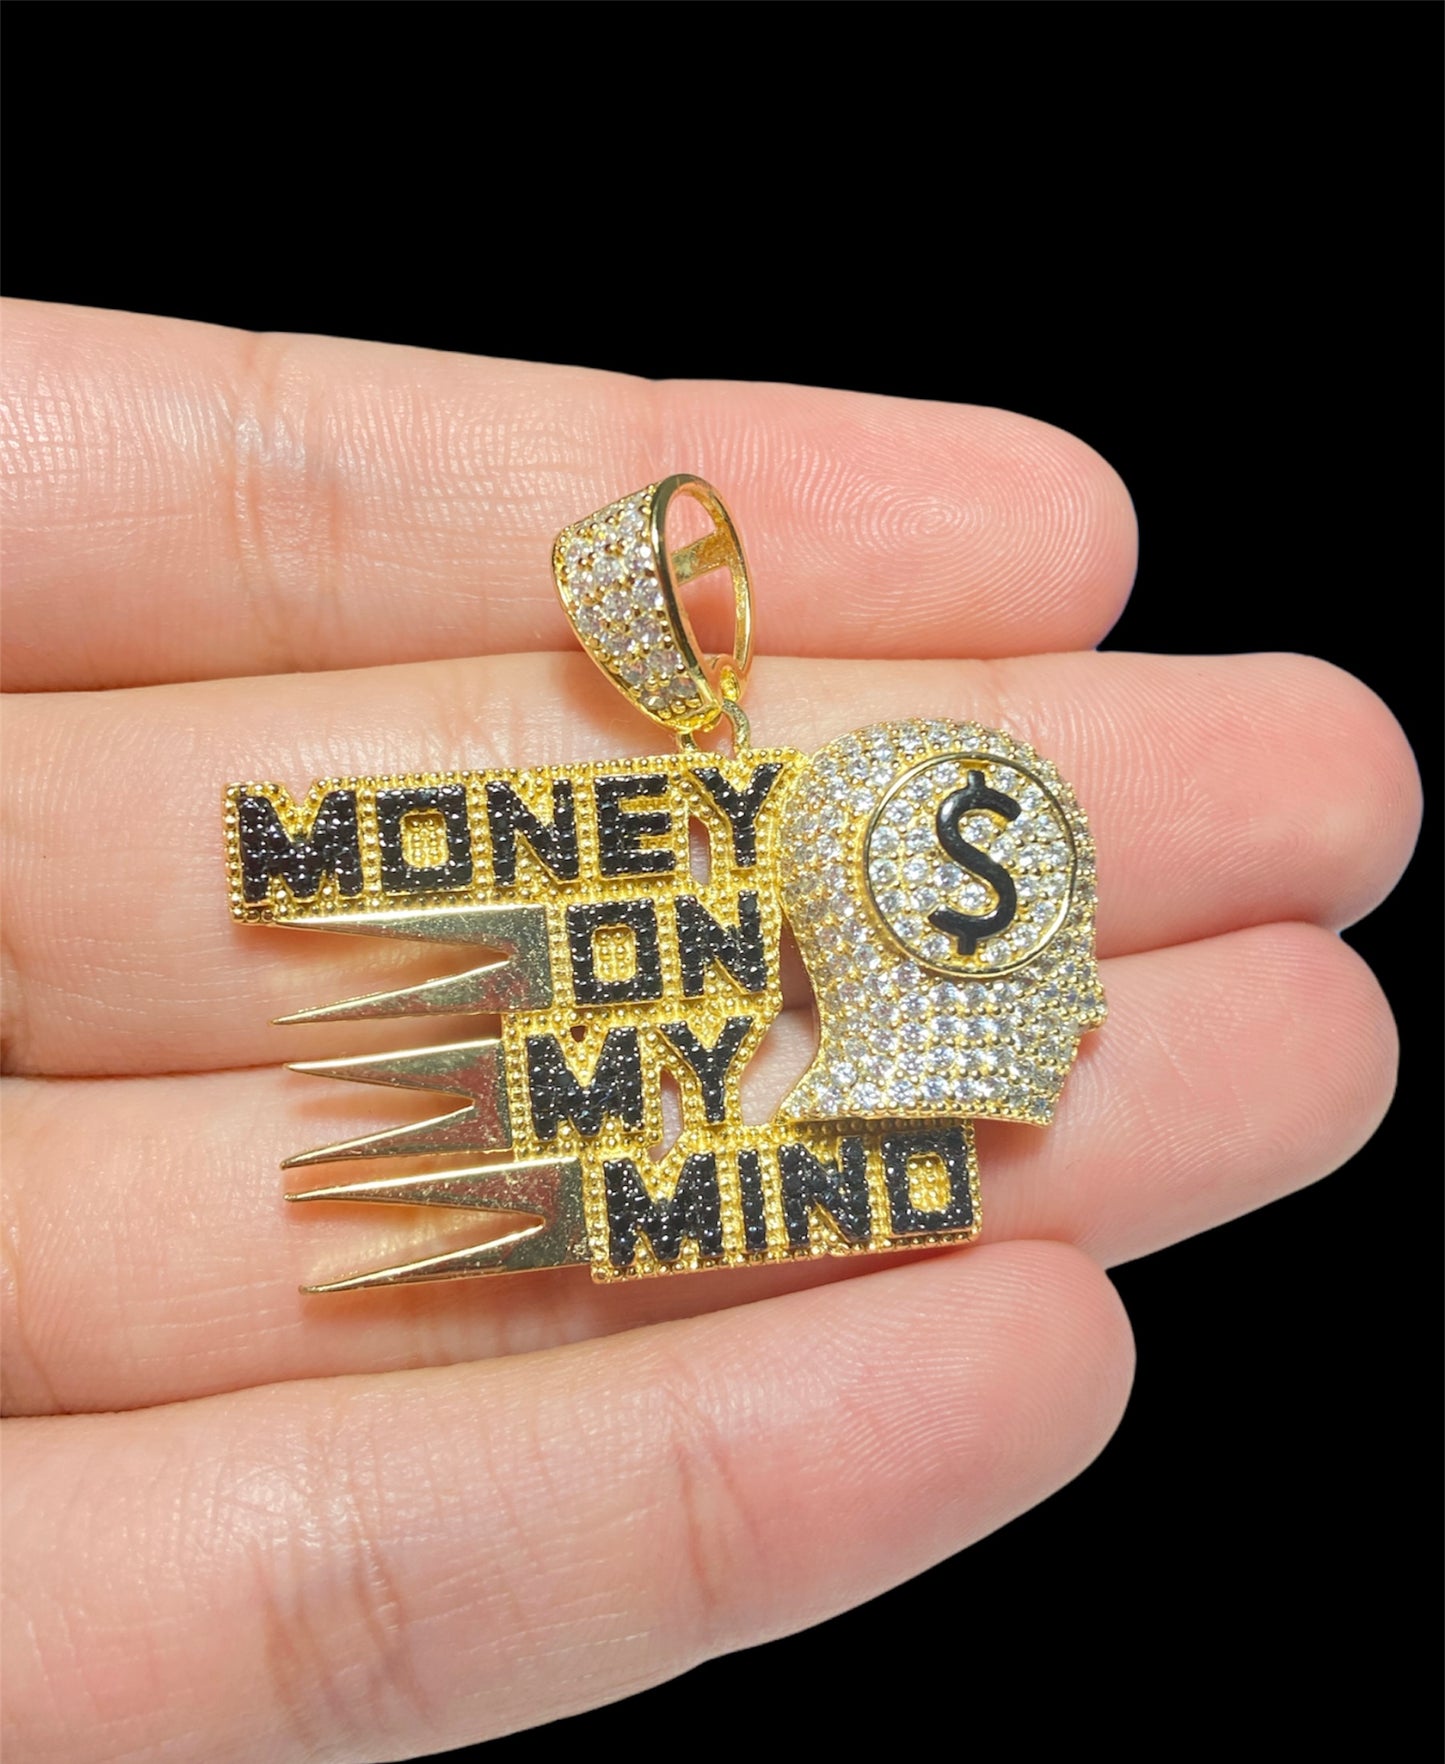 Pendant “MONEY ON MY MIND”